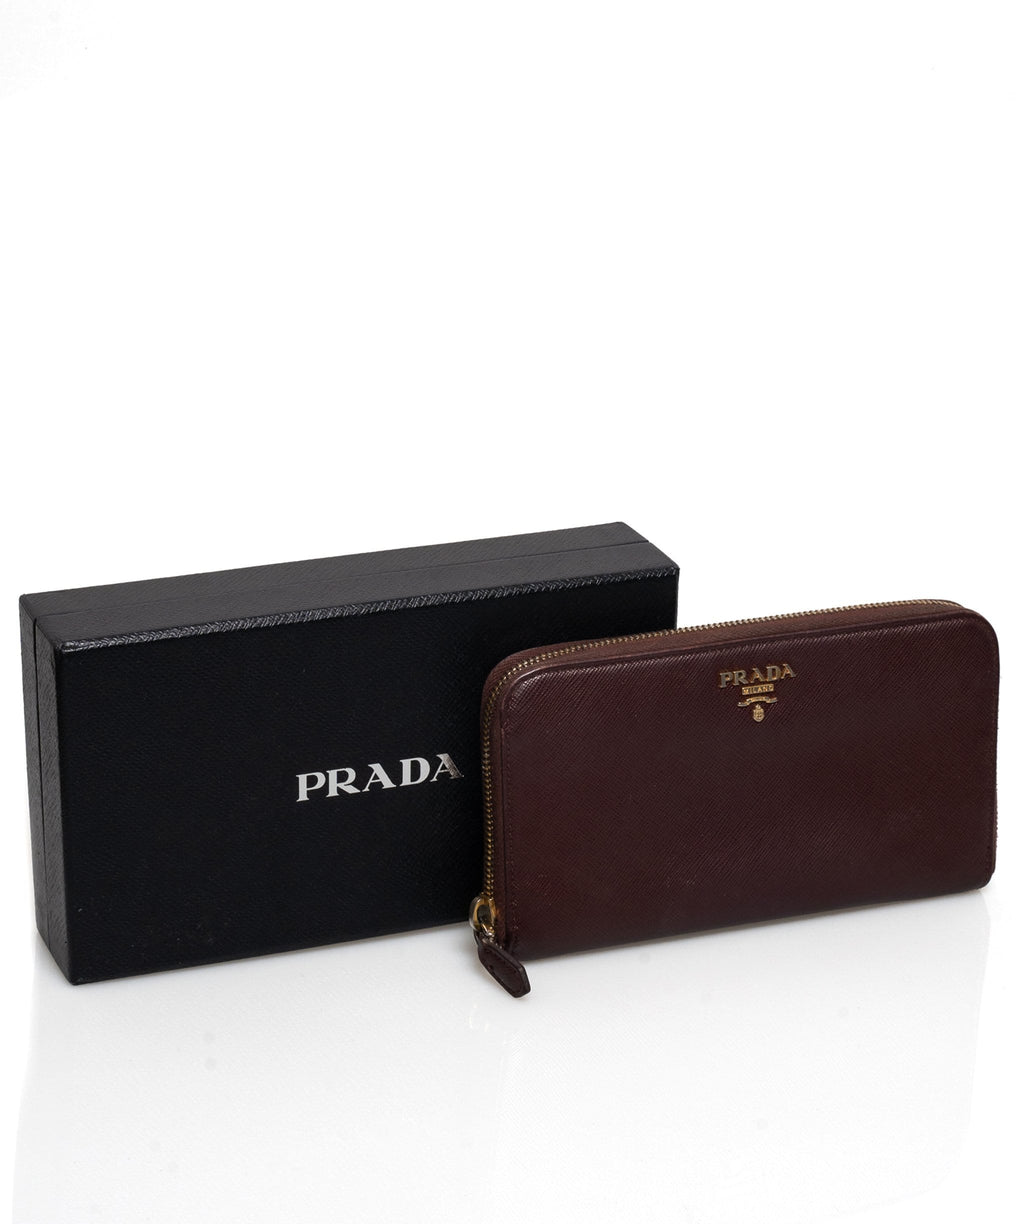 Prada Saffiano Leather Metallic Gold Organizer Wallet 1M0506 Beige – BRANDS  N BAGS